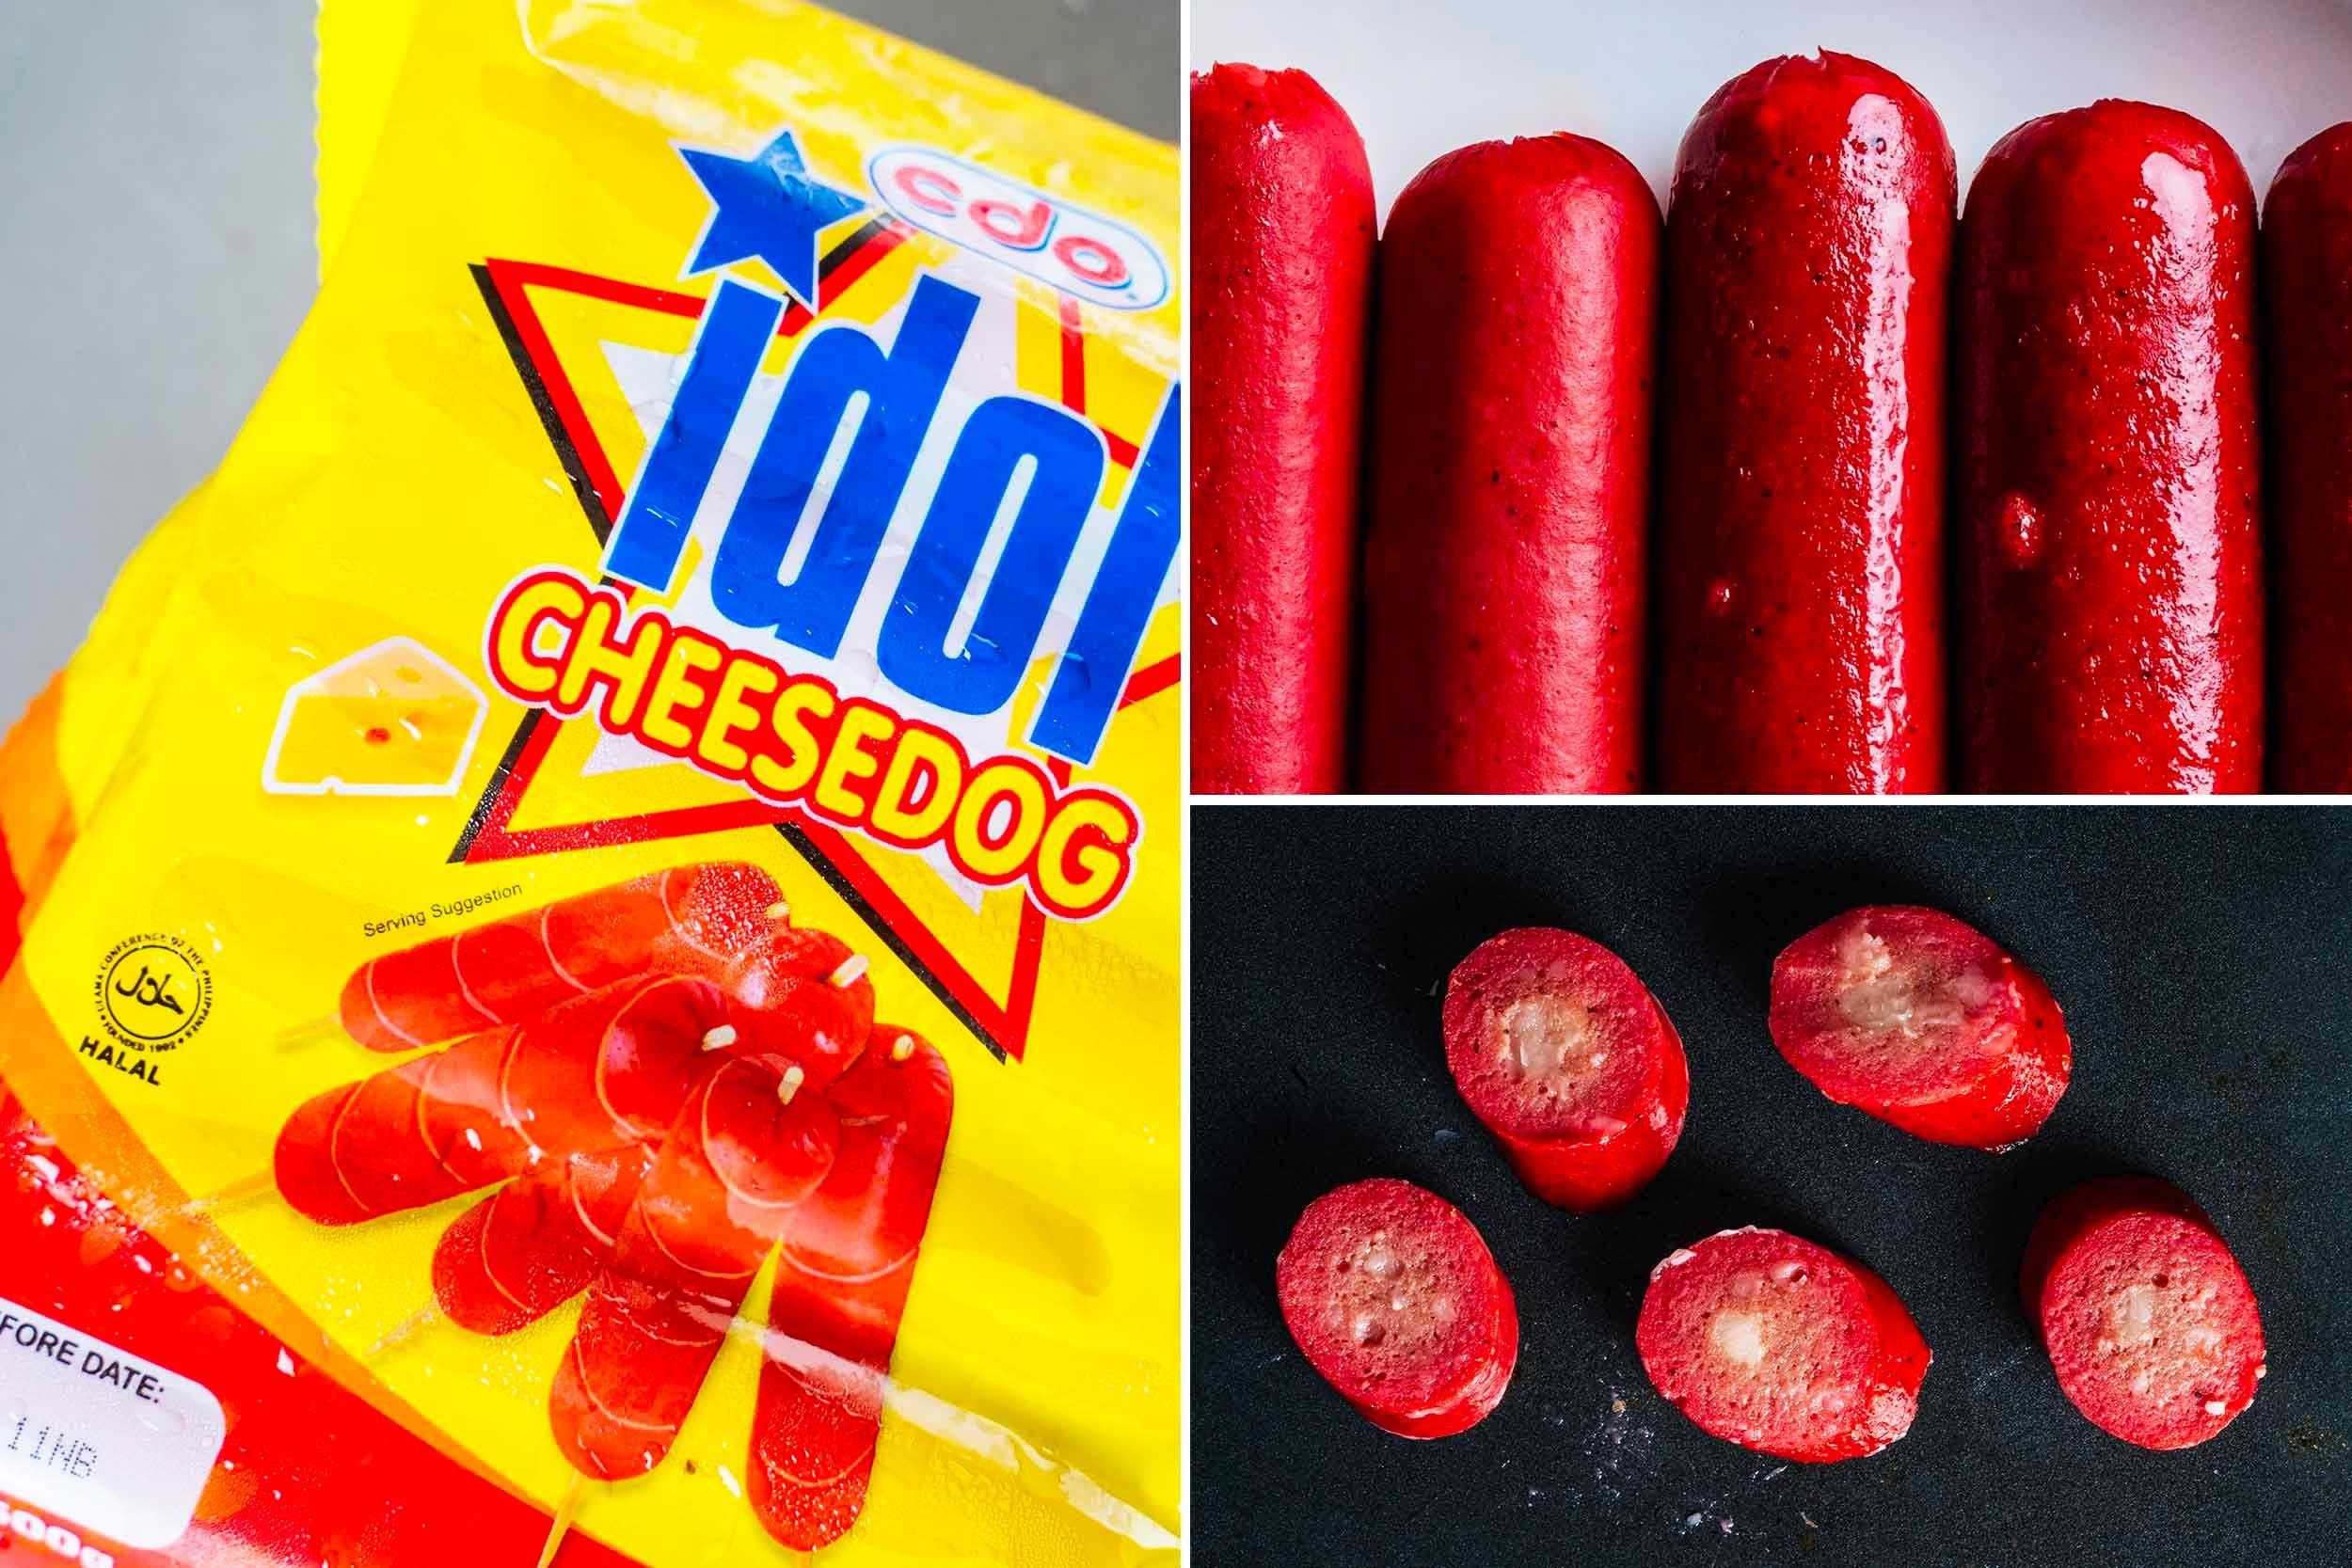 Cheesedog-Taste-Test-CDO-Idol.jpg